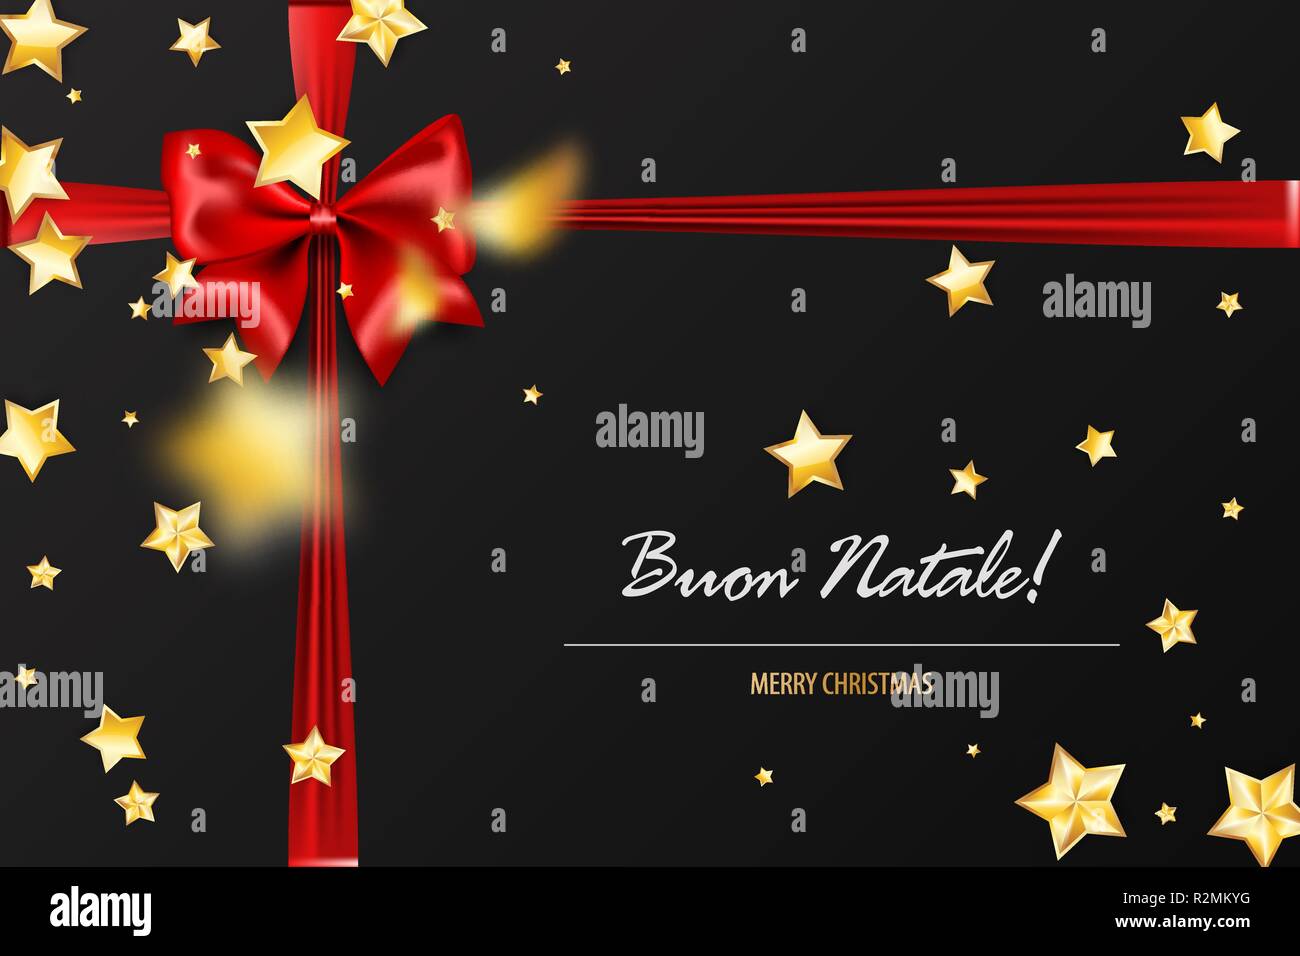 Buon Natale 3d.Buon Natale Merry Christmas Italian Greetings Holiday Christmas Red Gift Silk Bow Xmas Textile Decor Realistic 3d Vector Illustration Gold Star Stock Vector Image Art Alamy